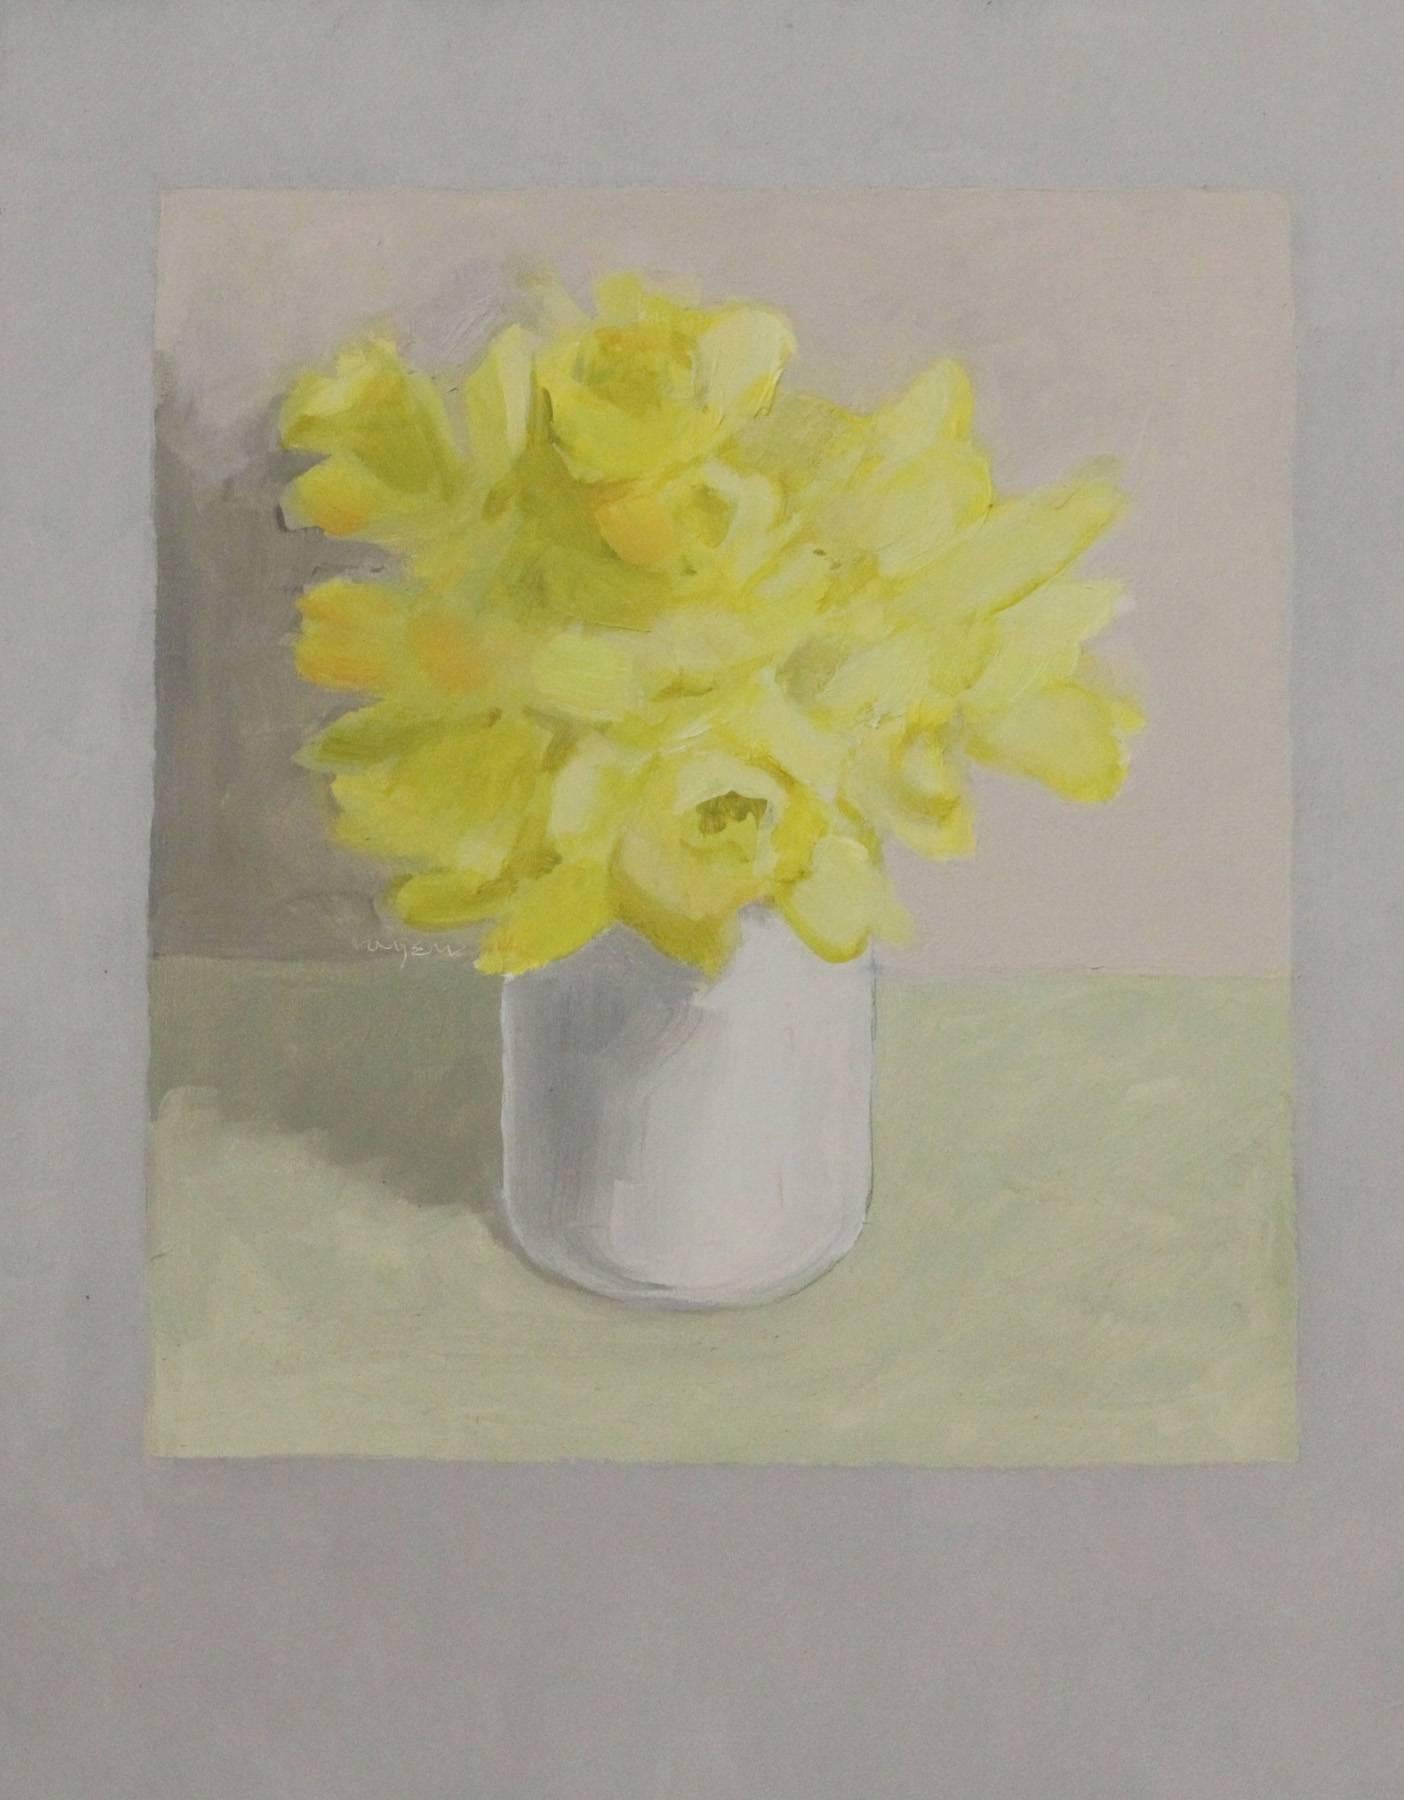 Flower #2 (Yellow Flower) - Painting by James Wilson Rayen